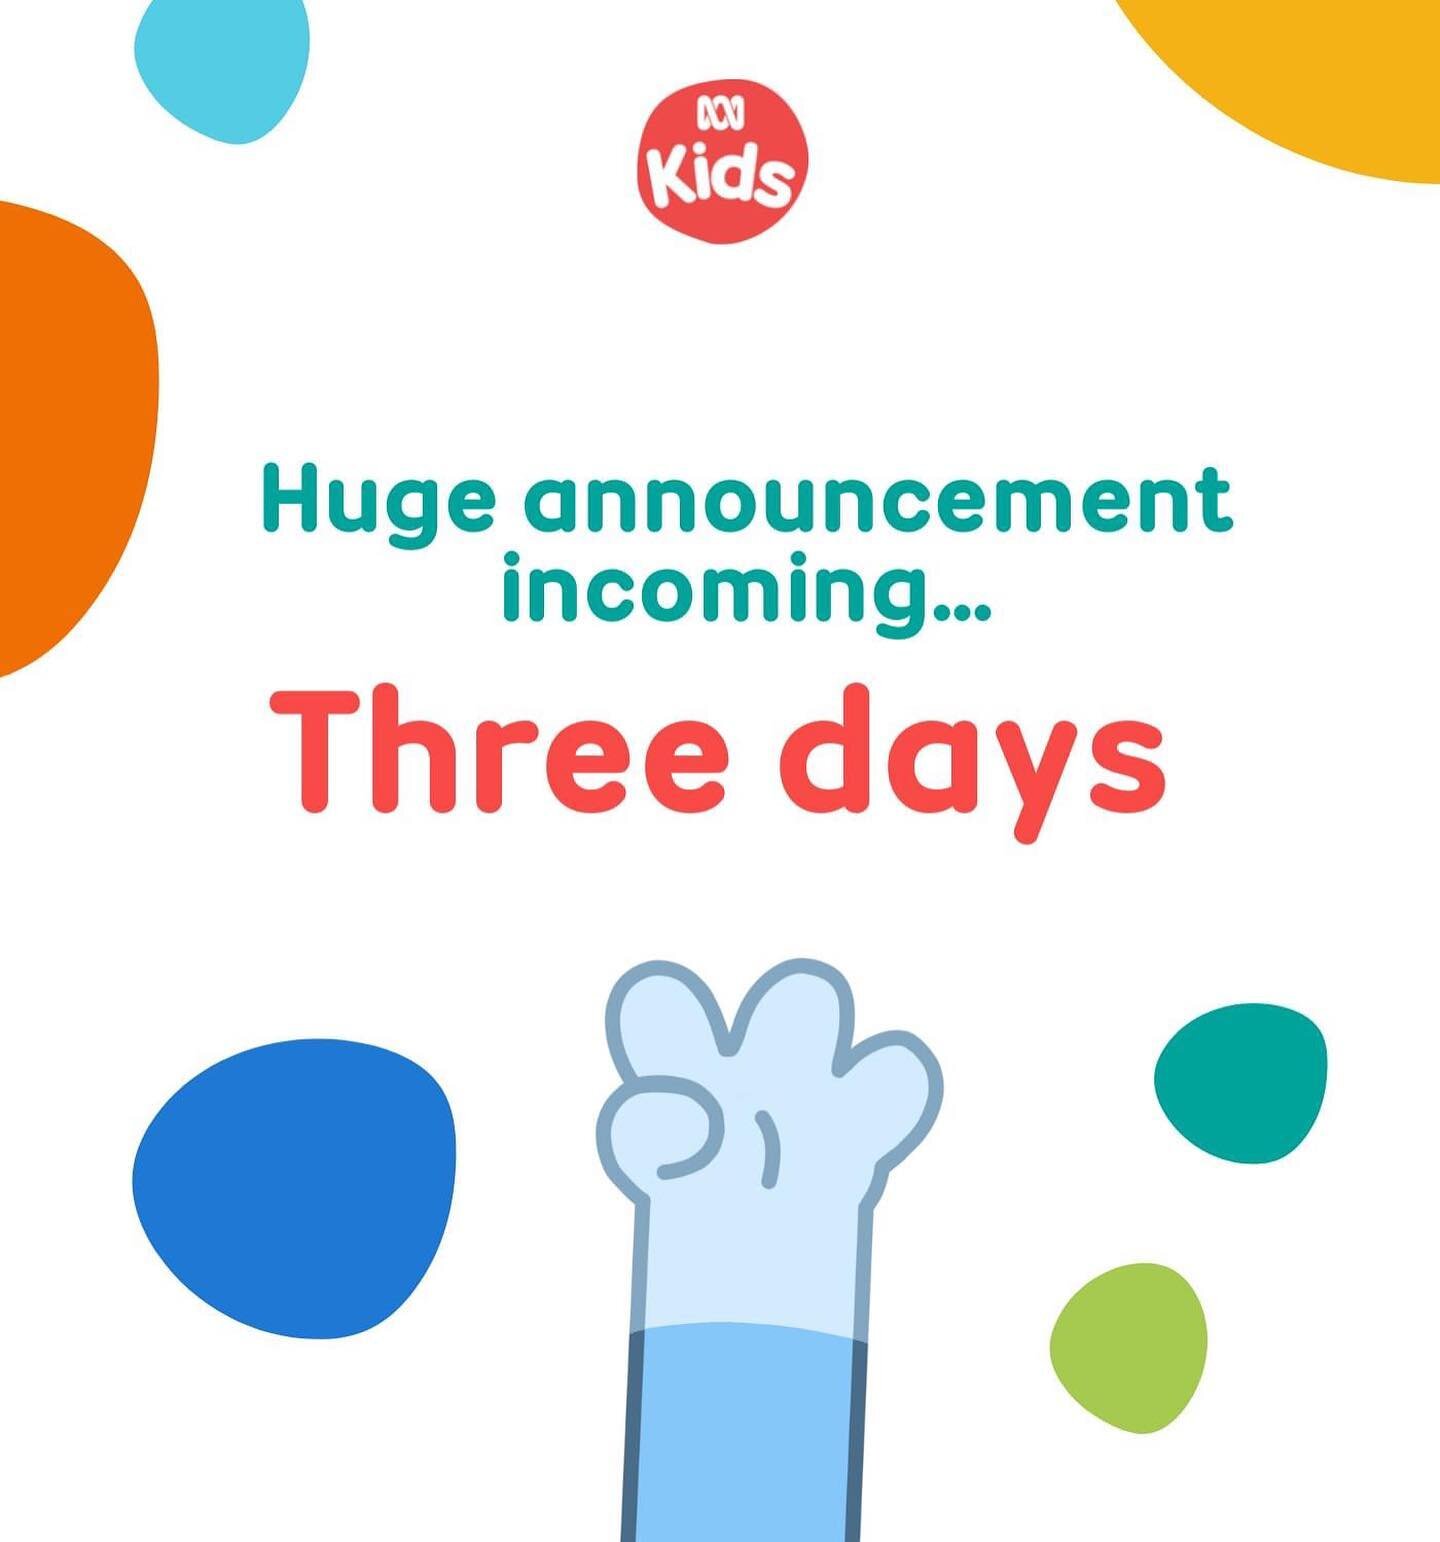 ABC Kids Community has been dropping hints for a week now&hellip;.
Only 3 days to go&hellip;
What could it be???
.
.
@officialblueytv @abctv #Bluey #blueyrecaps #heelerfamily #blueyandbingo #blueycartoon #welovebluey #bandit #chilli #bingo #ludostudi